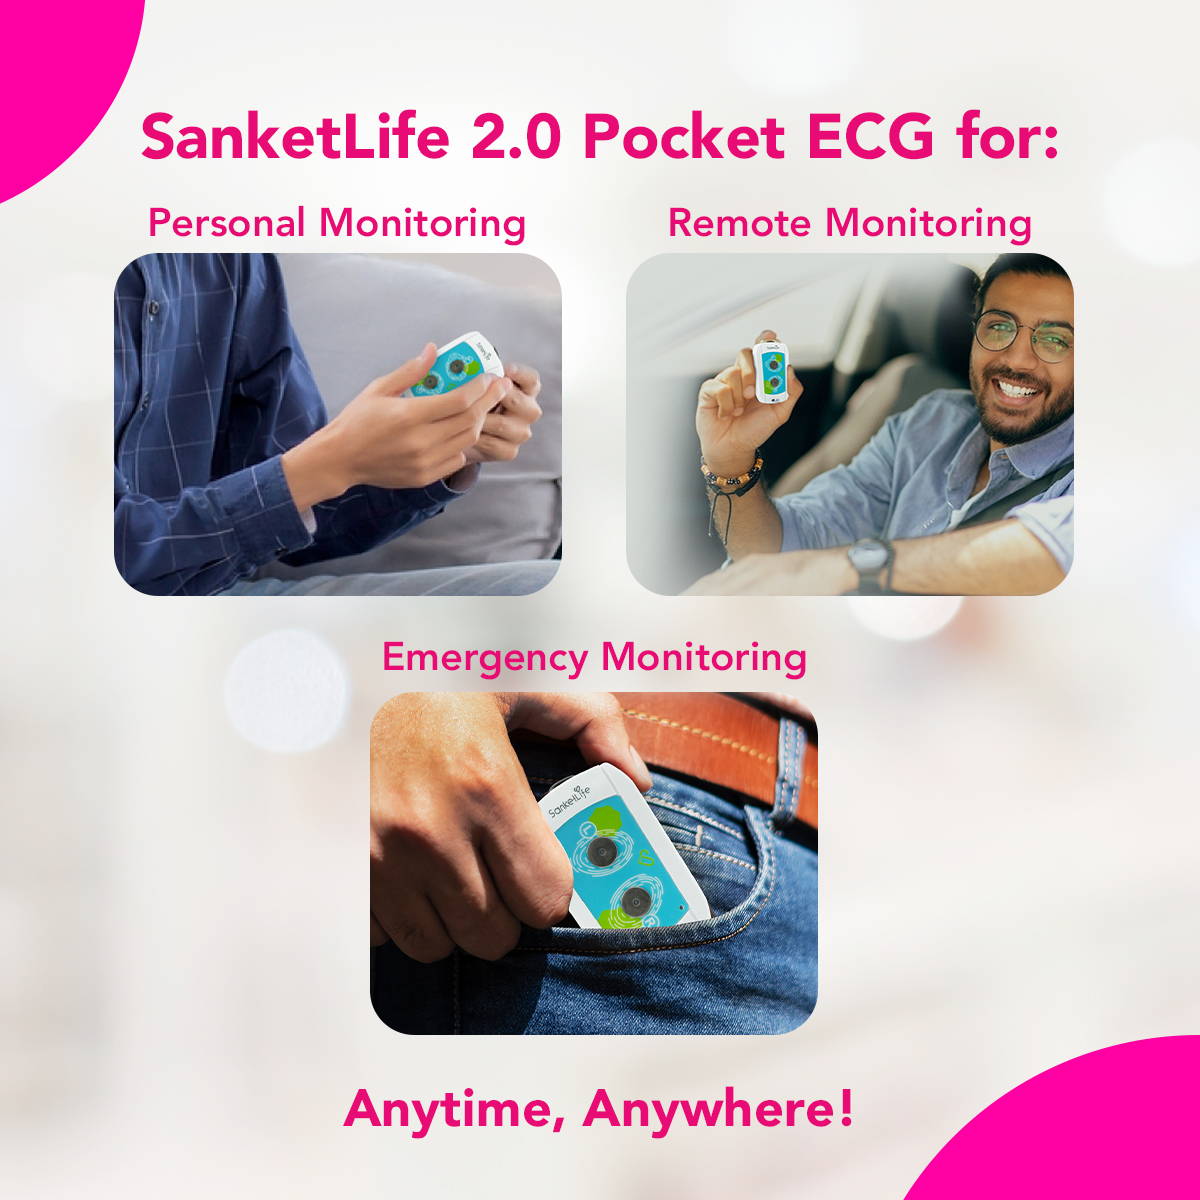 Sanketlife pocket ecg, sankelife portable ecg device